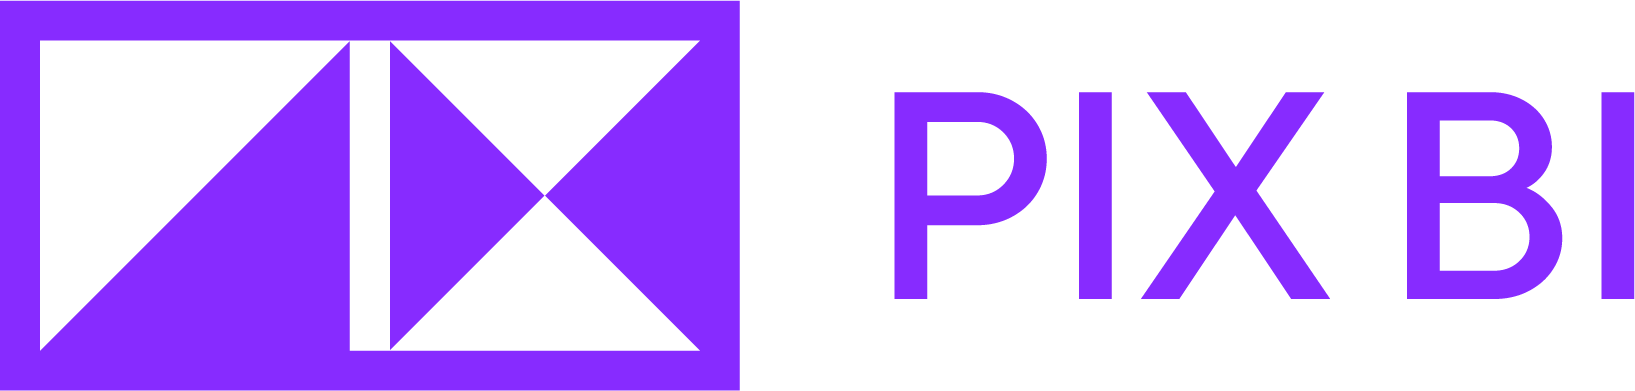 PIX BI_Blocks_H_Purple_для светлого фона